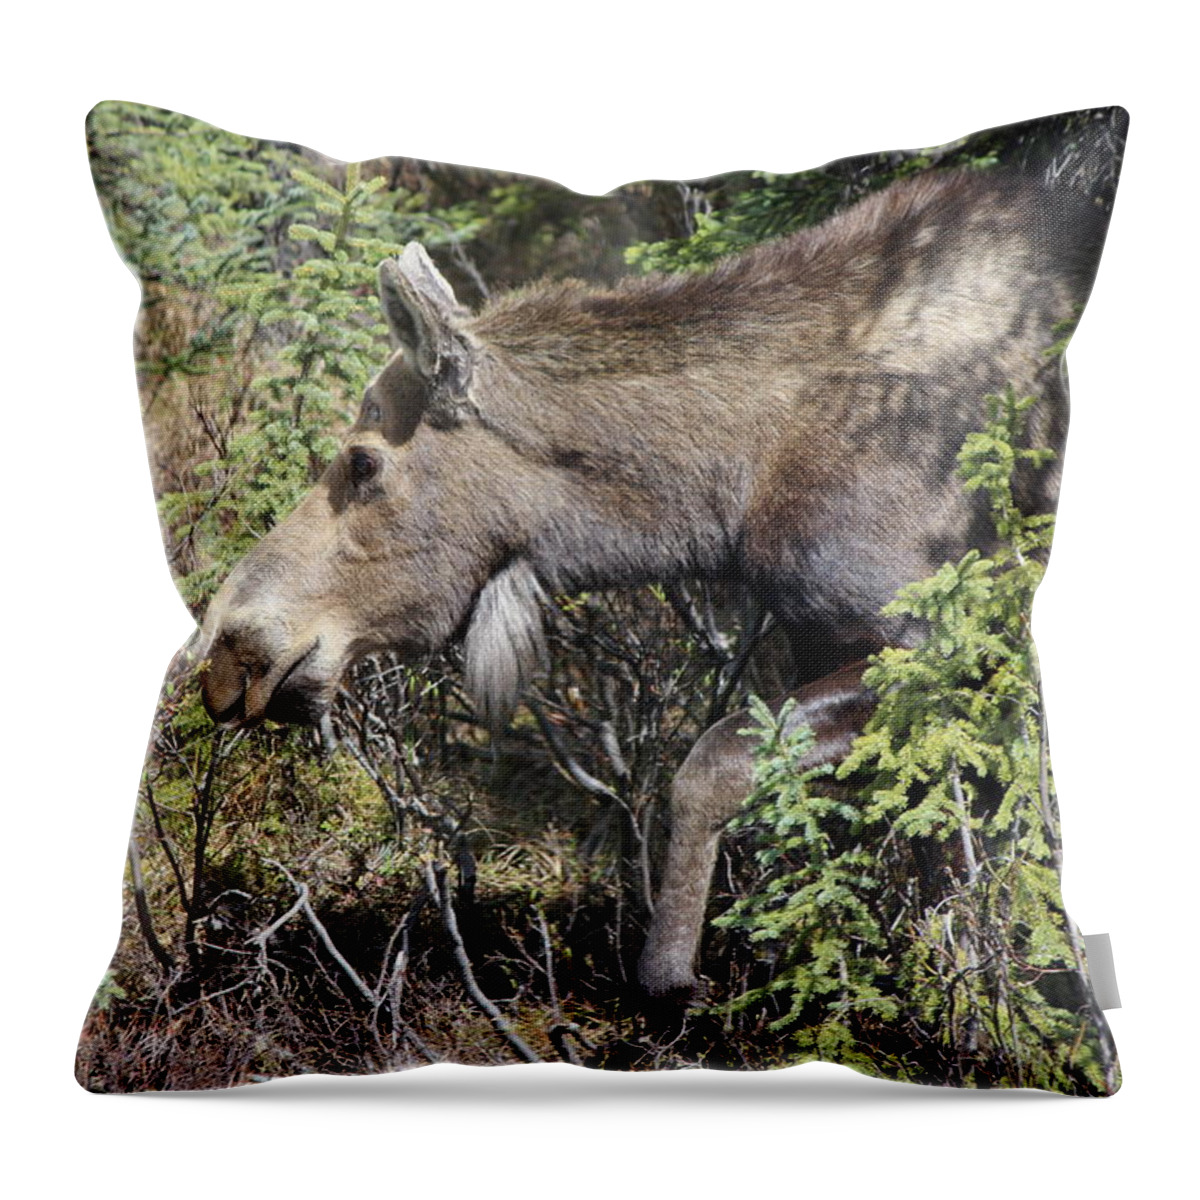 Moose Throw Pillow featuring the photograph The Moose by John Mathews